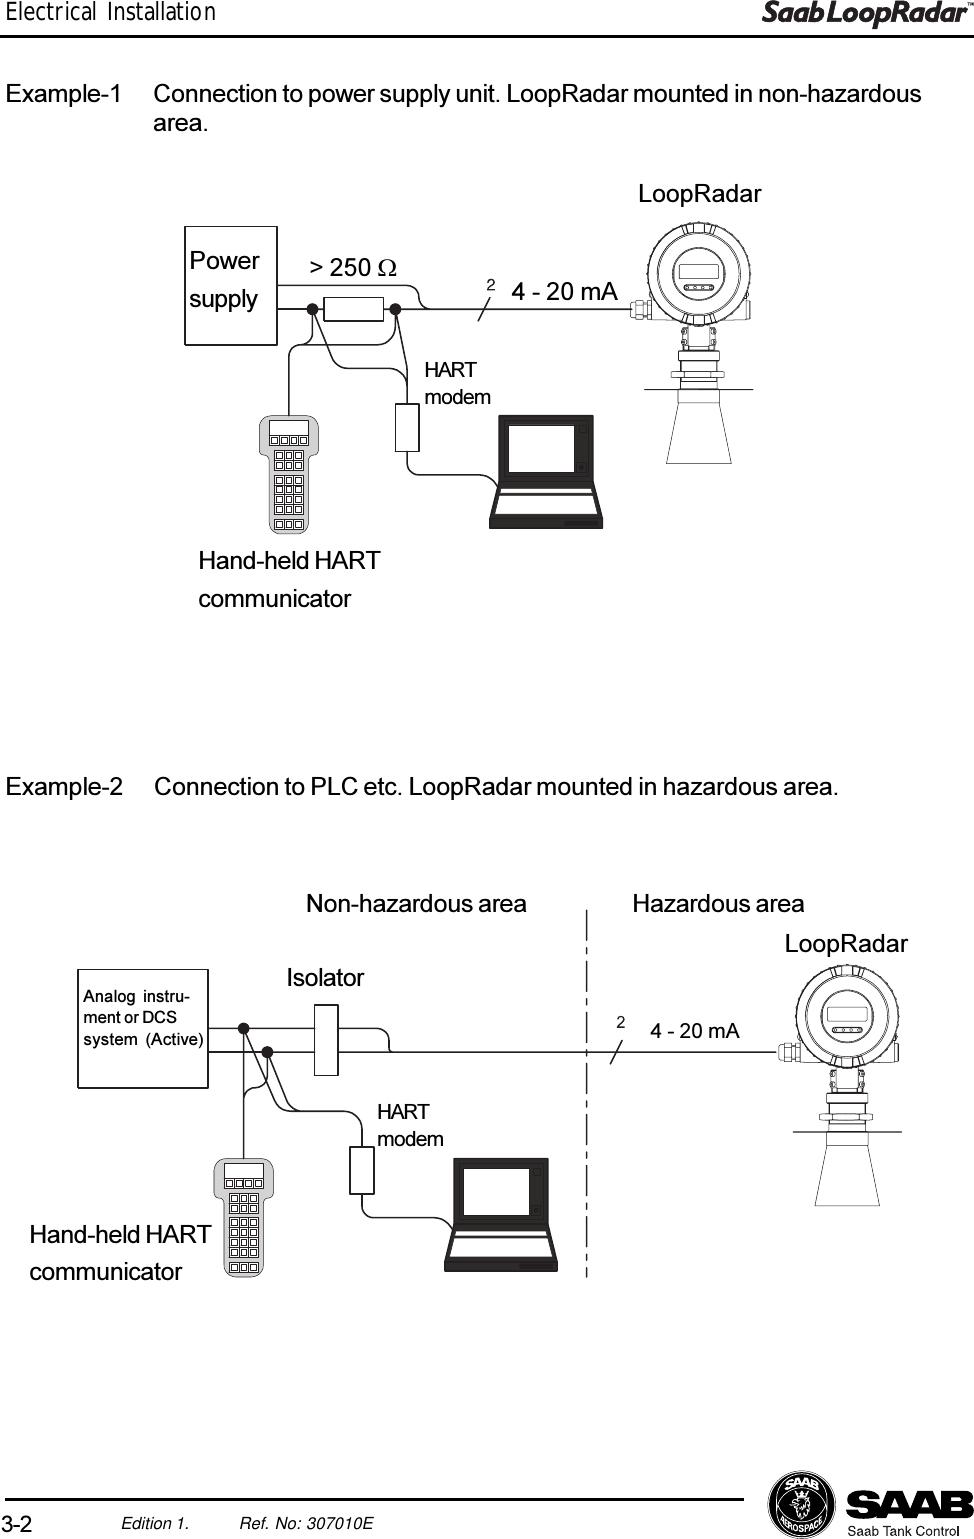 3-2Edition 1. Ref. No: 307010EElectrical InstallationExample-1 Connection to power supply unit. LoopRadar mounted in non-hazardousarea.Example-2 Connection to PLC etc. LoopRadar mounted in hazardous area.Powersupply&gt; 250 W4 - 20 mAHARTmodemHand-held HARTcommunicatorLoopRadarAnalog instru-ment or DCSsystem (Active)IsolatorHARTmodemNon-hazardous area Hazardous area4 - 20 mALoopRadarHand-held HARTcommunicator